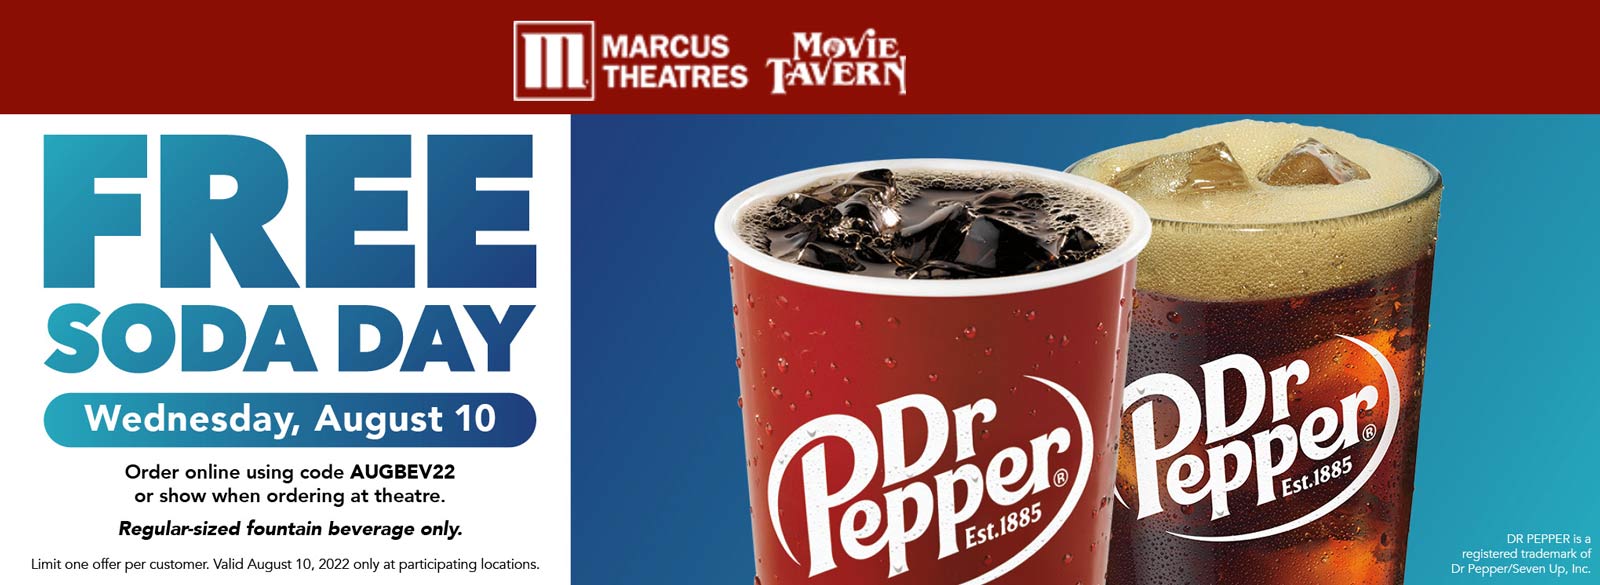 Marcus Theatres restaurants Coupon  Free soda today at Marcus Theatres via promo code AUGBEV22 #marcustheatres 